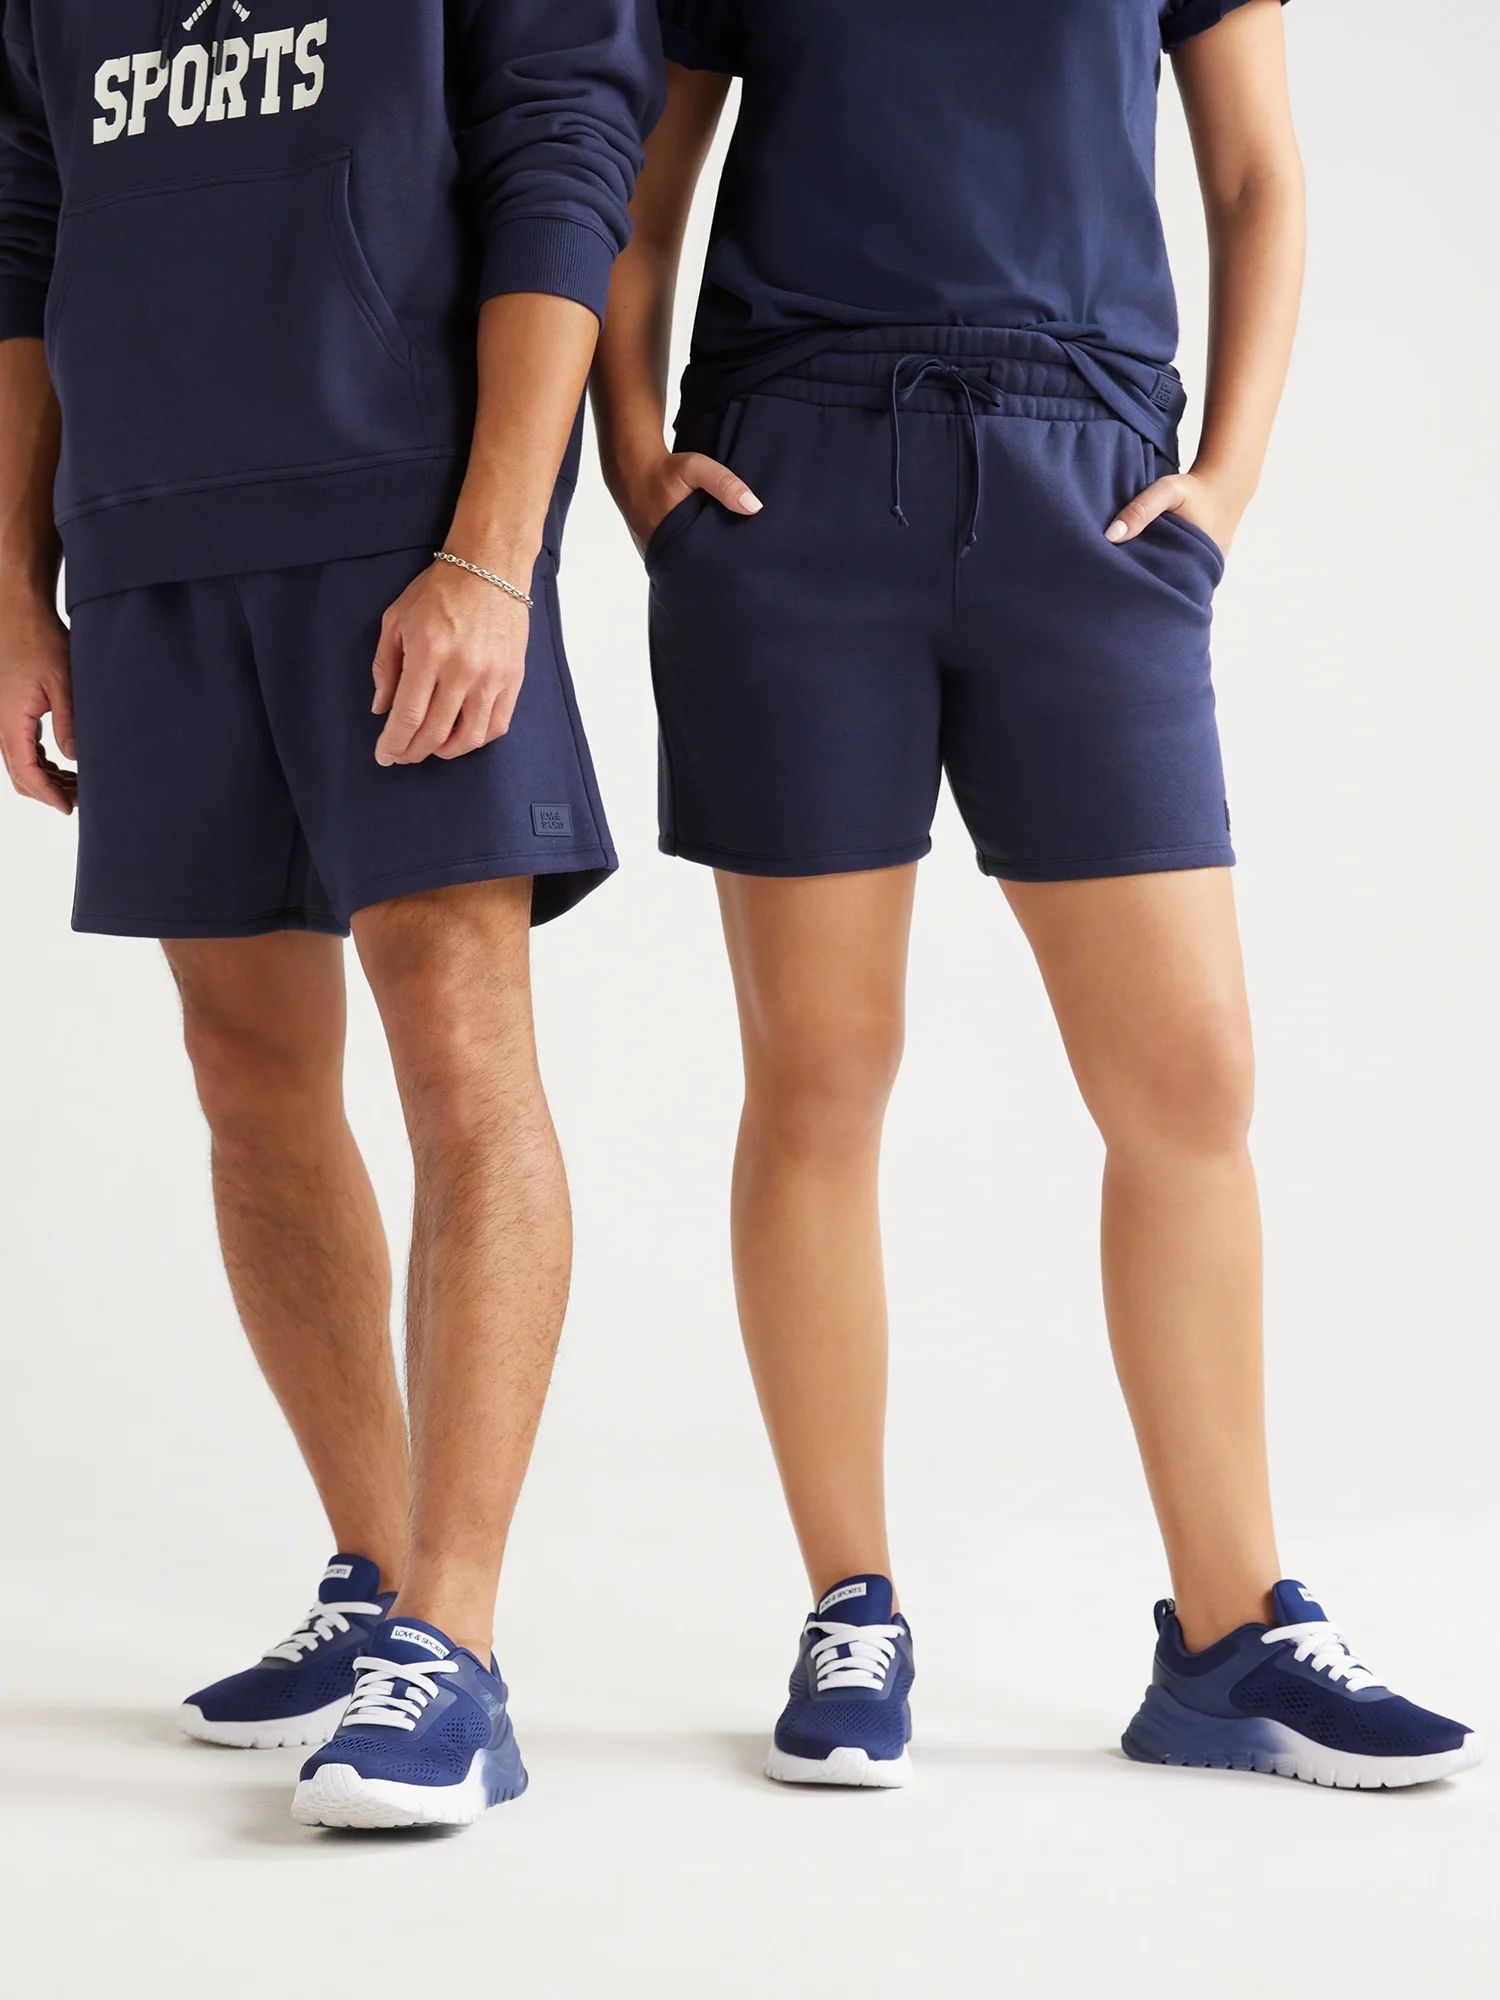 Love & Sports All Gender Malibu Fleece Shorts, 7” Inseam, Sizes S-XXXL | Walmart (US)